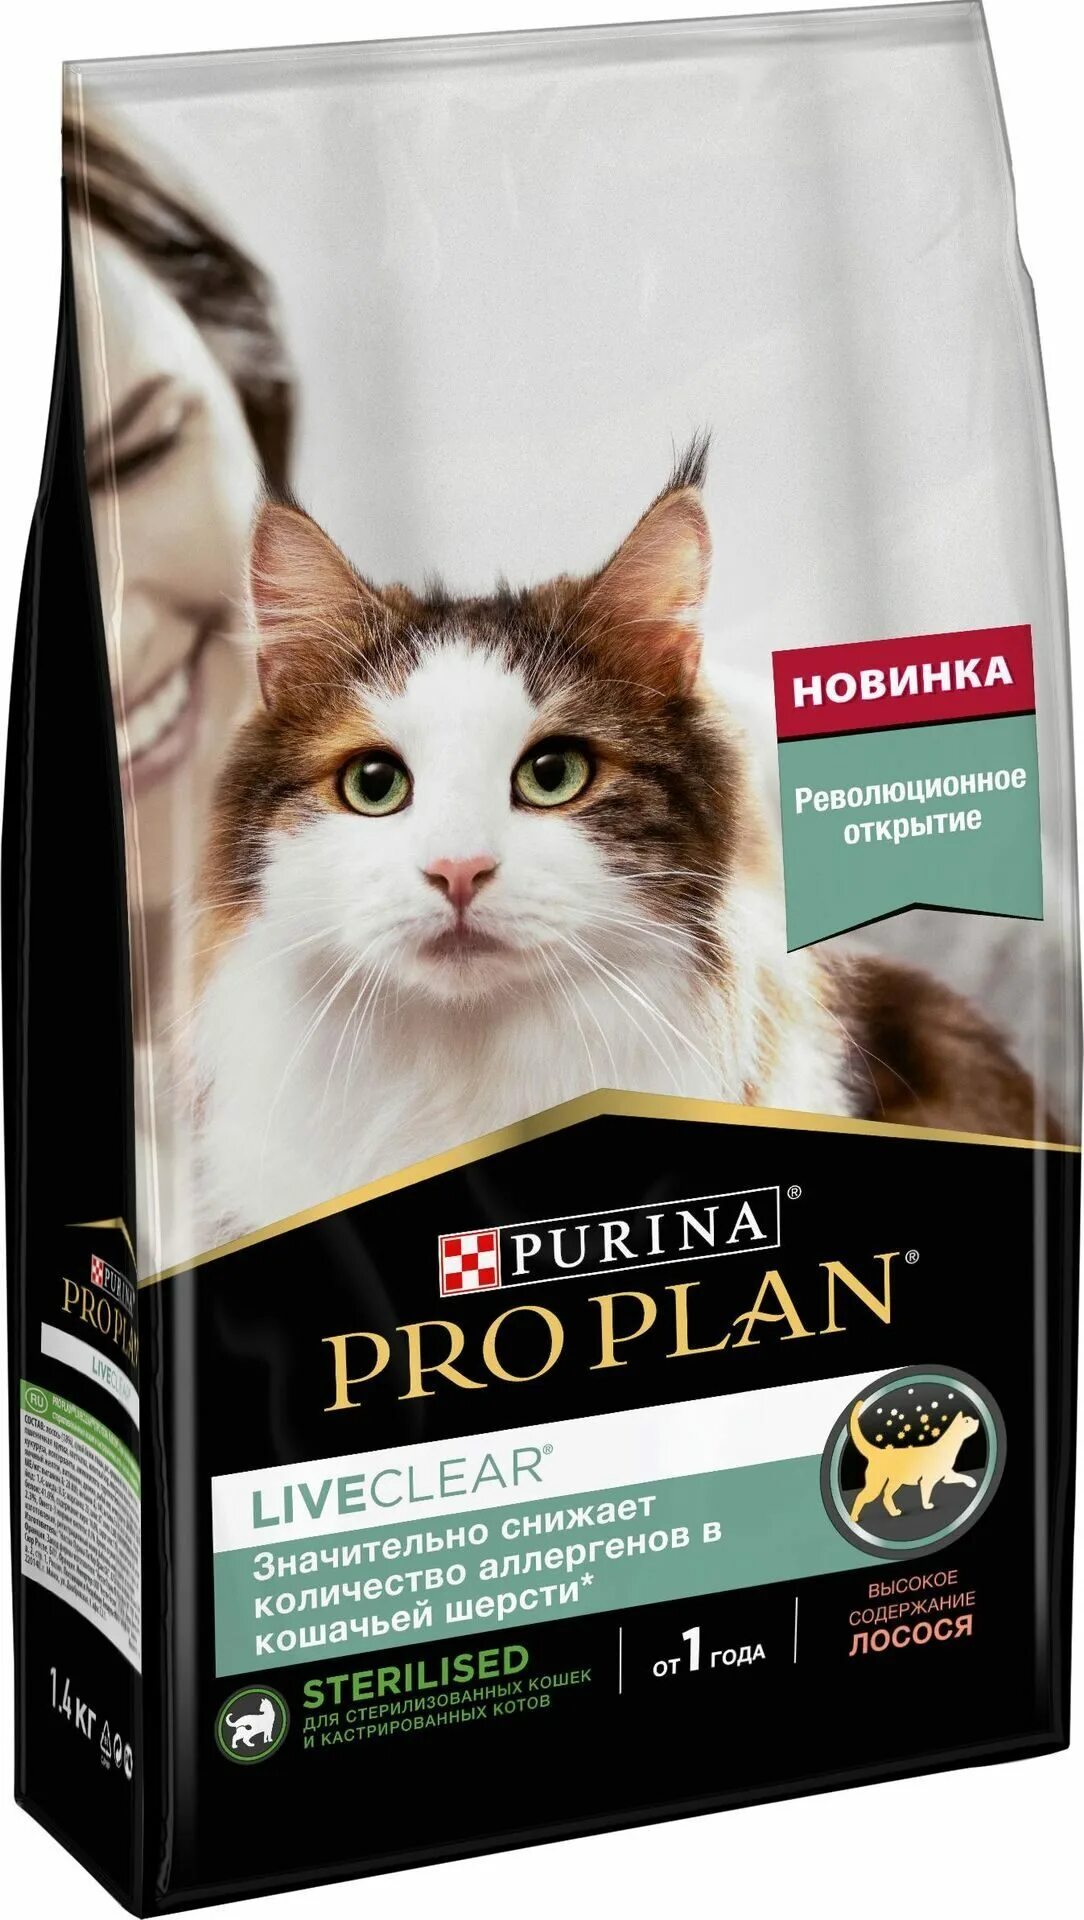 Pro Plan Sterilised для кошек. Корм Пурина Pro Plan Sterilised. Purina Pro Plan для кошек Sterilised. PROPLAN Purina liveclear 400 гр для котят.